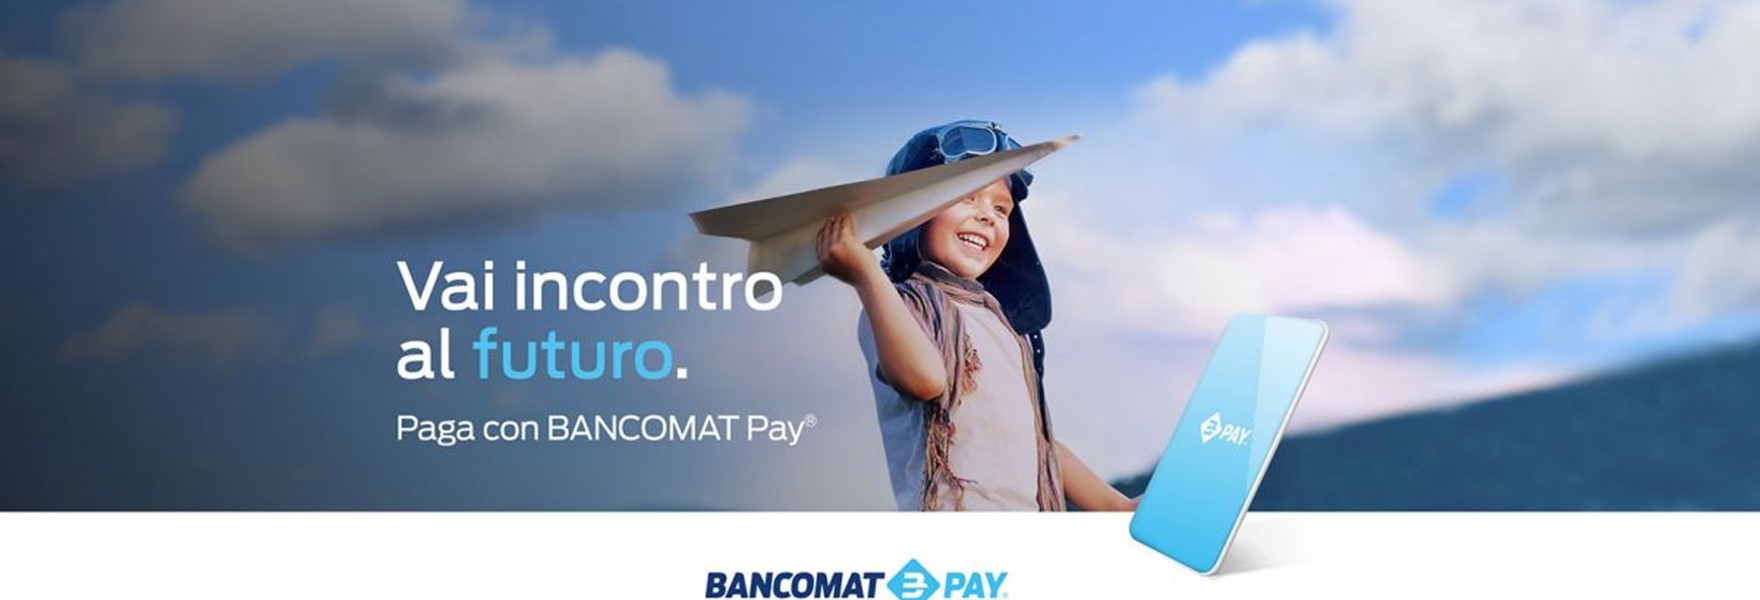 Bancomat pay v2 